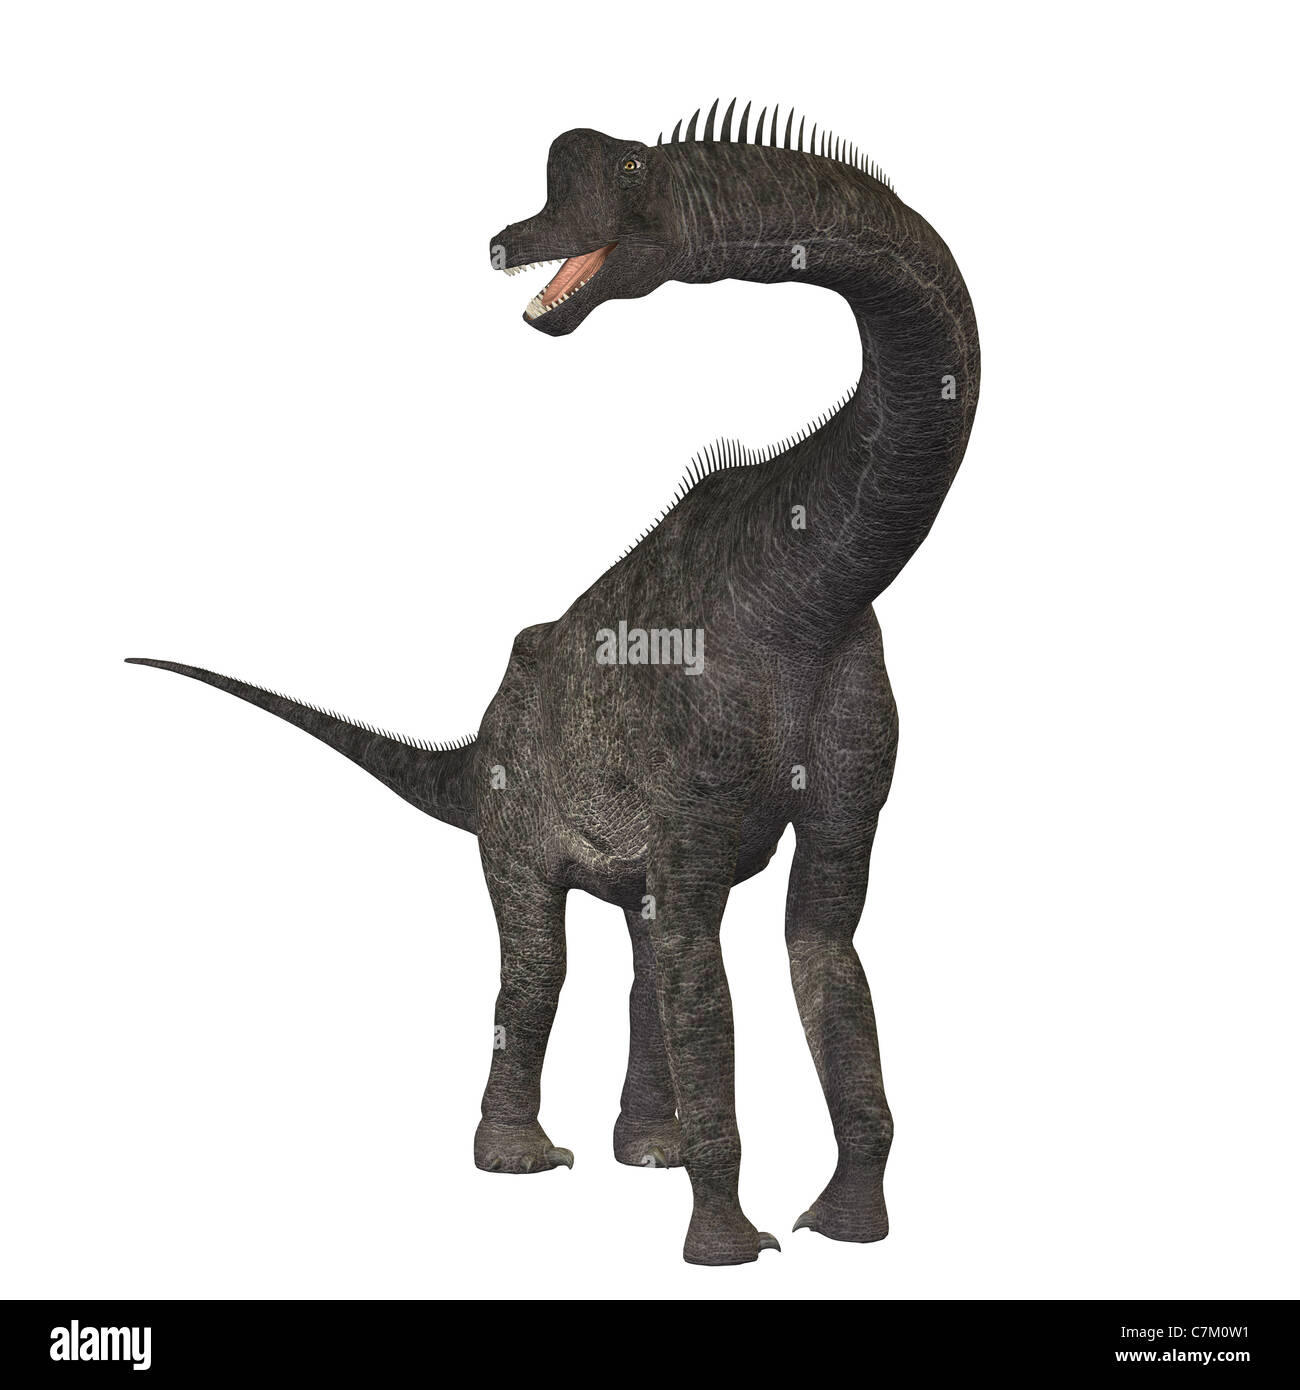 The Brachiosaurus dinosaur was a sauropod from the Jurassic Period. Stock Photo